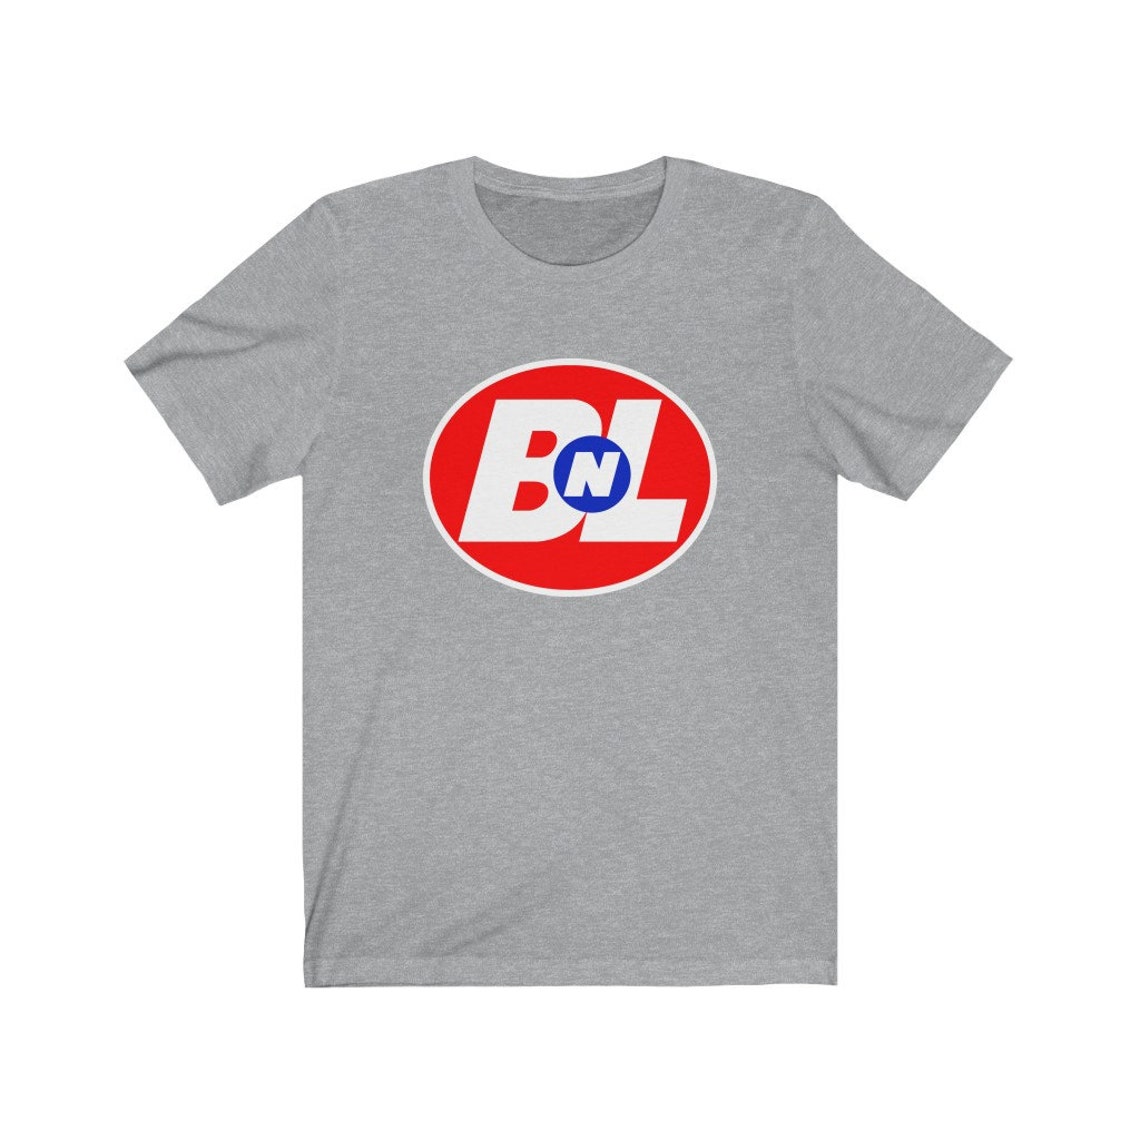 BnL T-Shirt Buy n Large Tshirt Fictional Megacorporation | Etsy